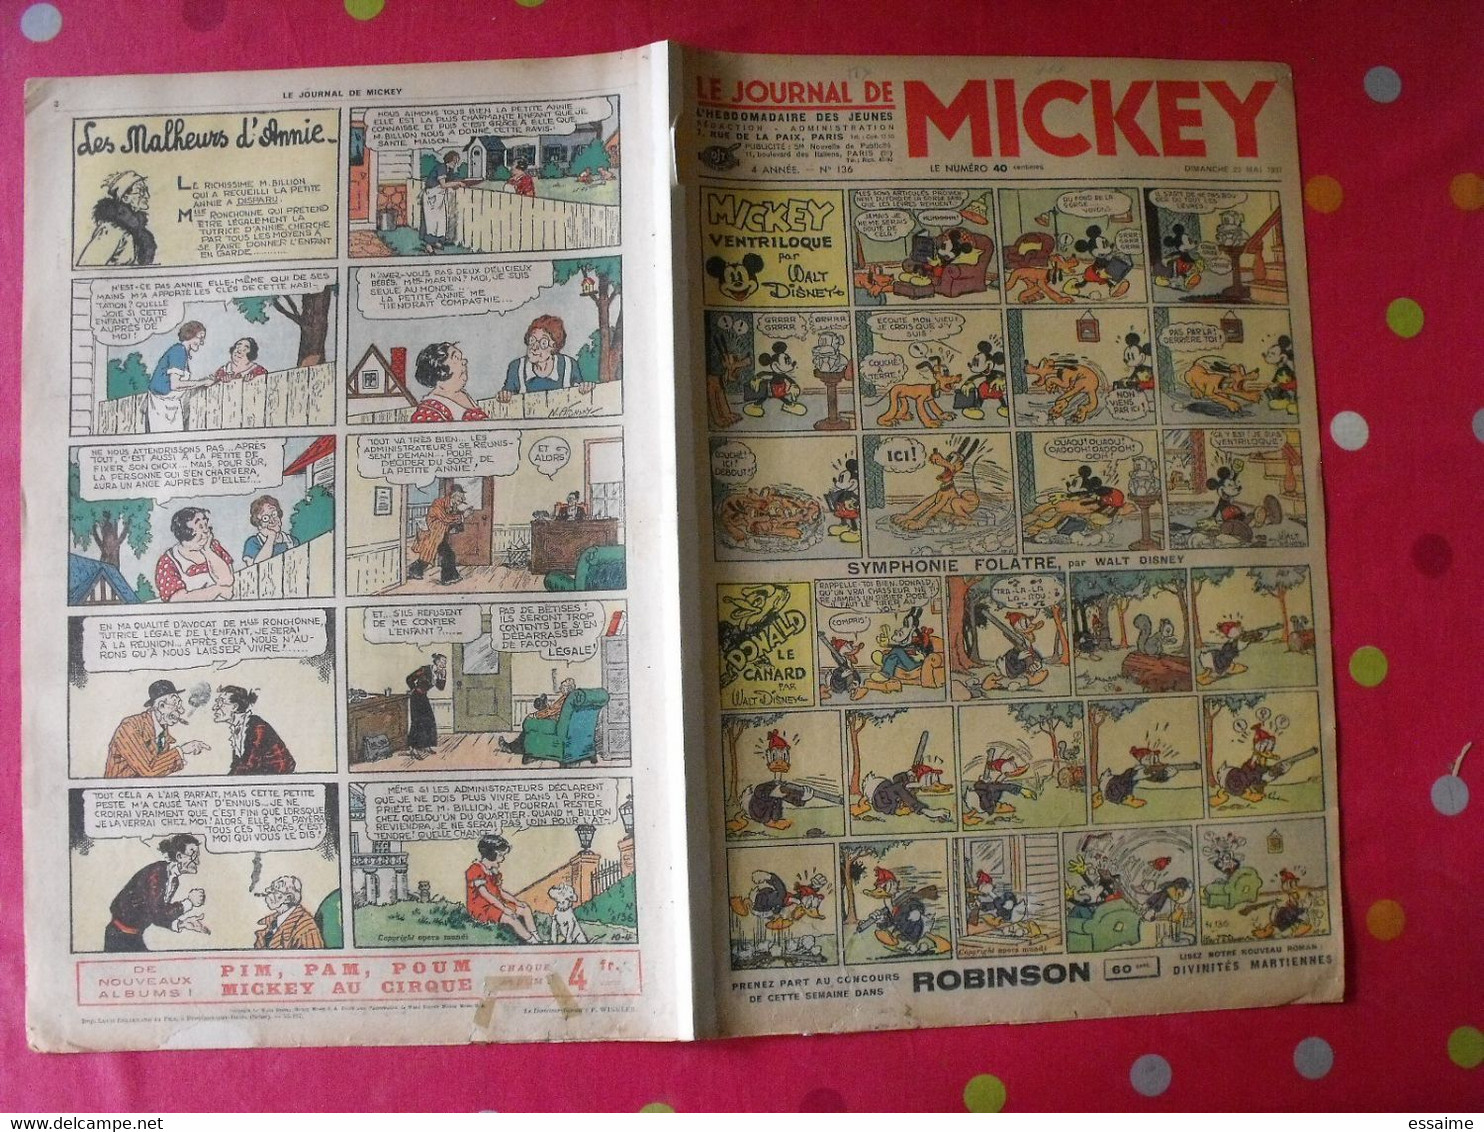 5 n° du journal de Mickey 1937. jojo richard jim la jungle malheurs d'annie donald cora tempête.